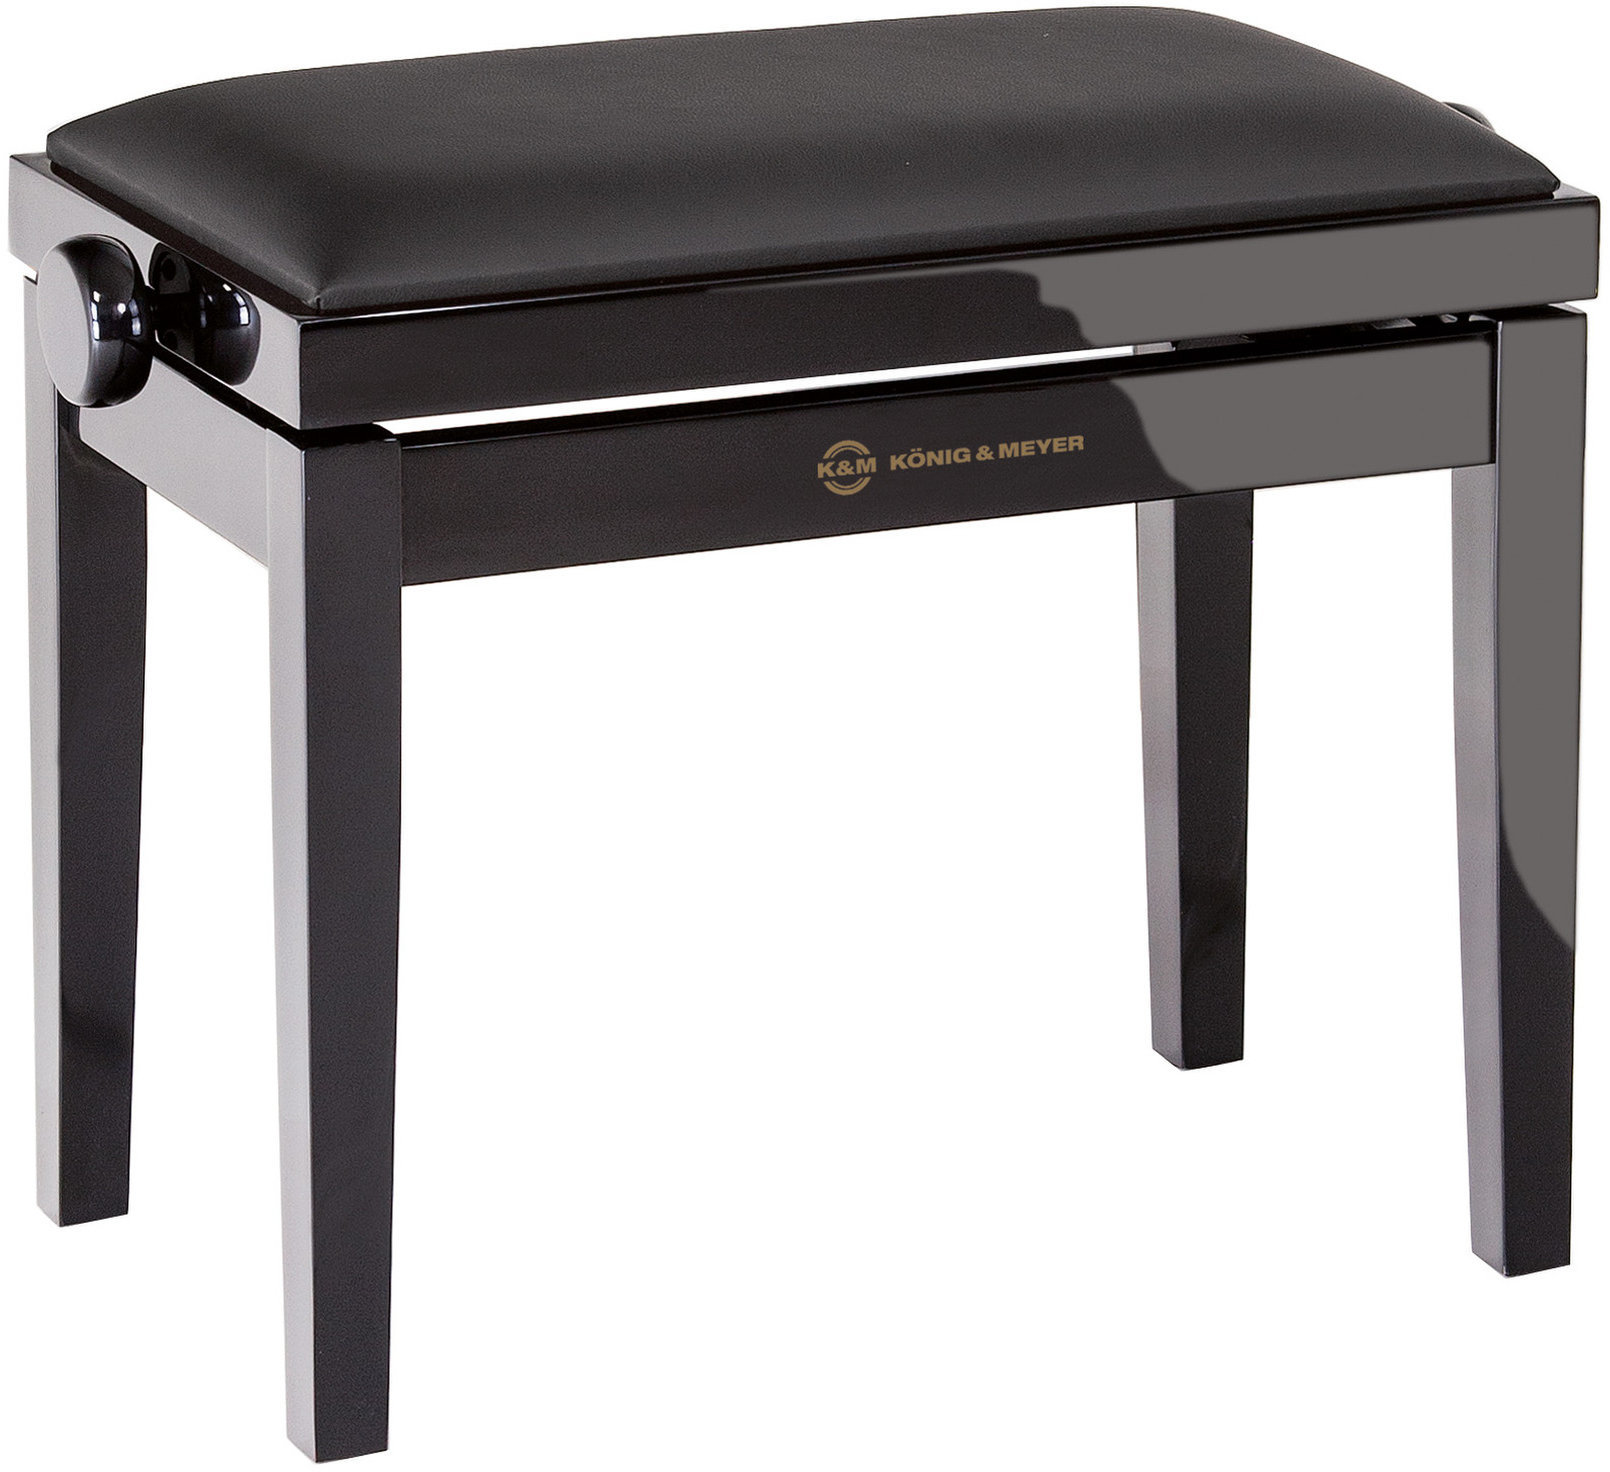 Drevené alebo klasické klavírne stoličky
 Konig & Meyer 13911 Black High Polish